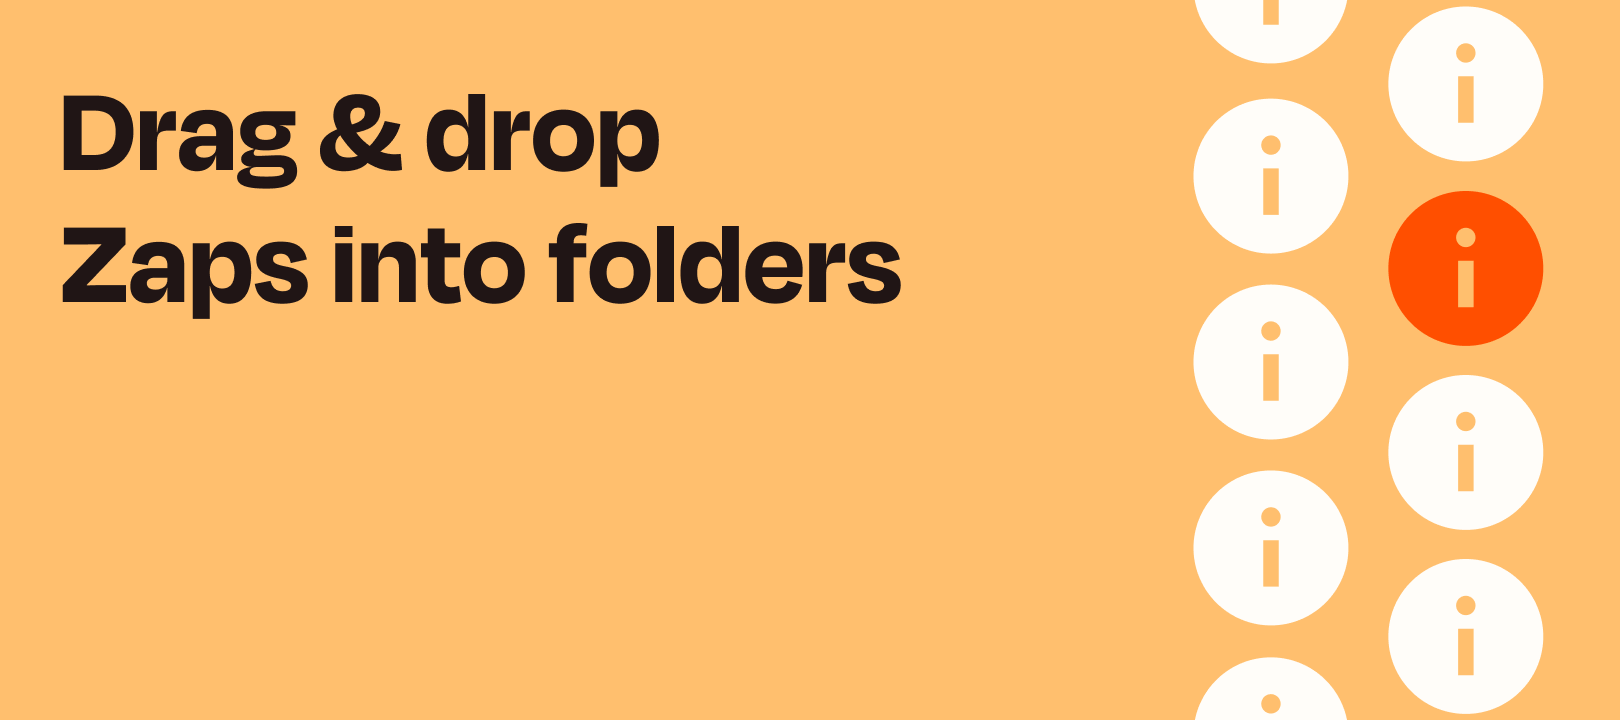 Drag & drop Zaps into folders